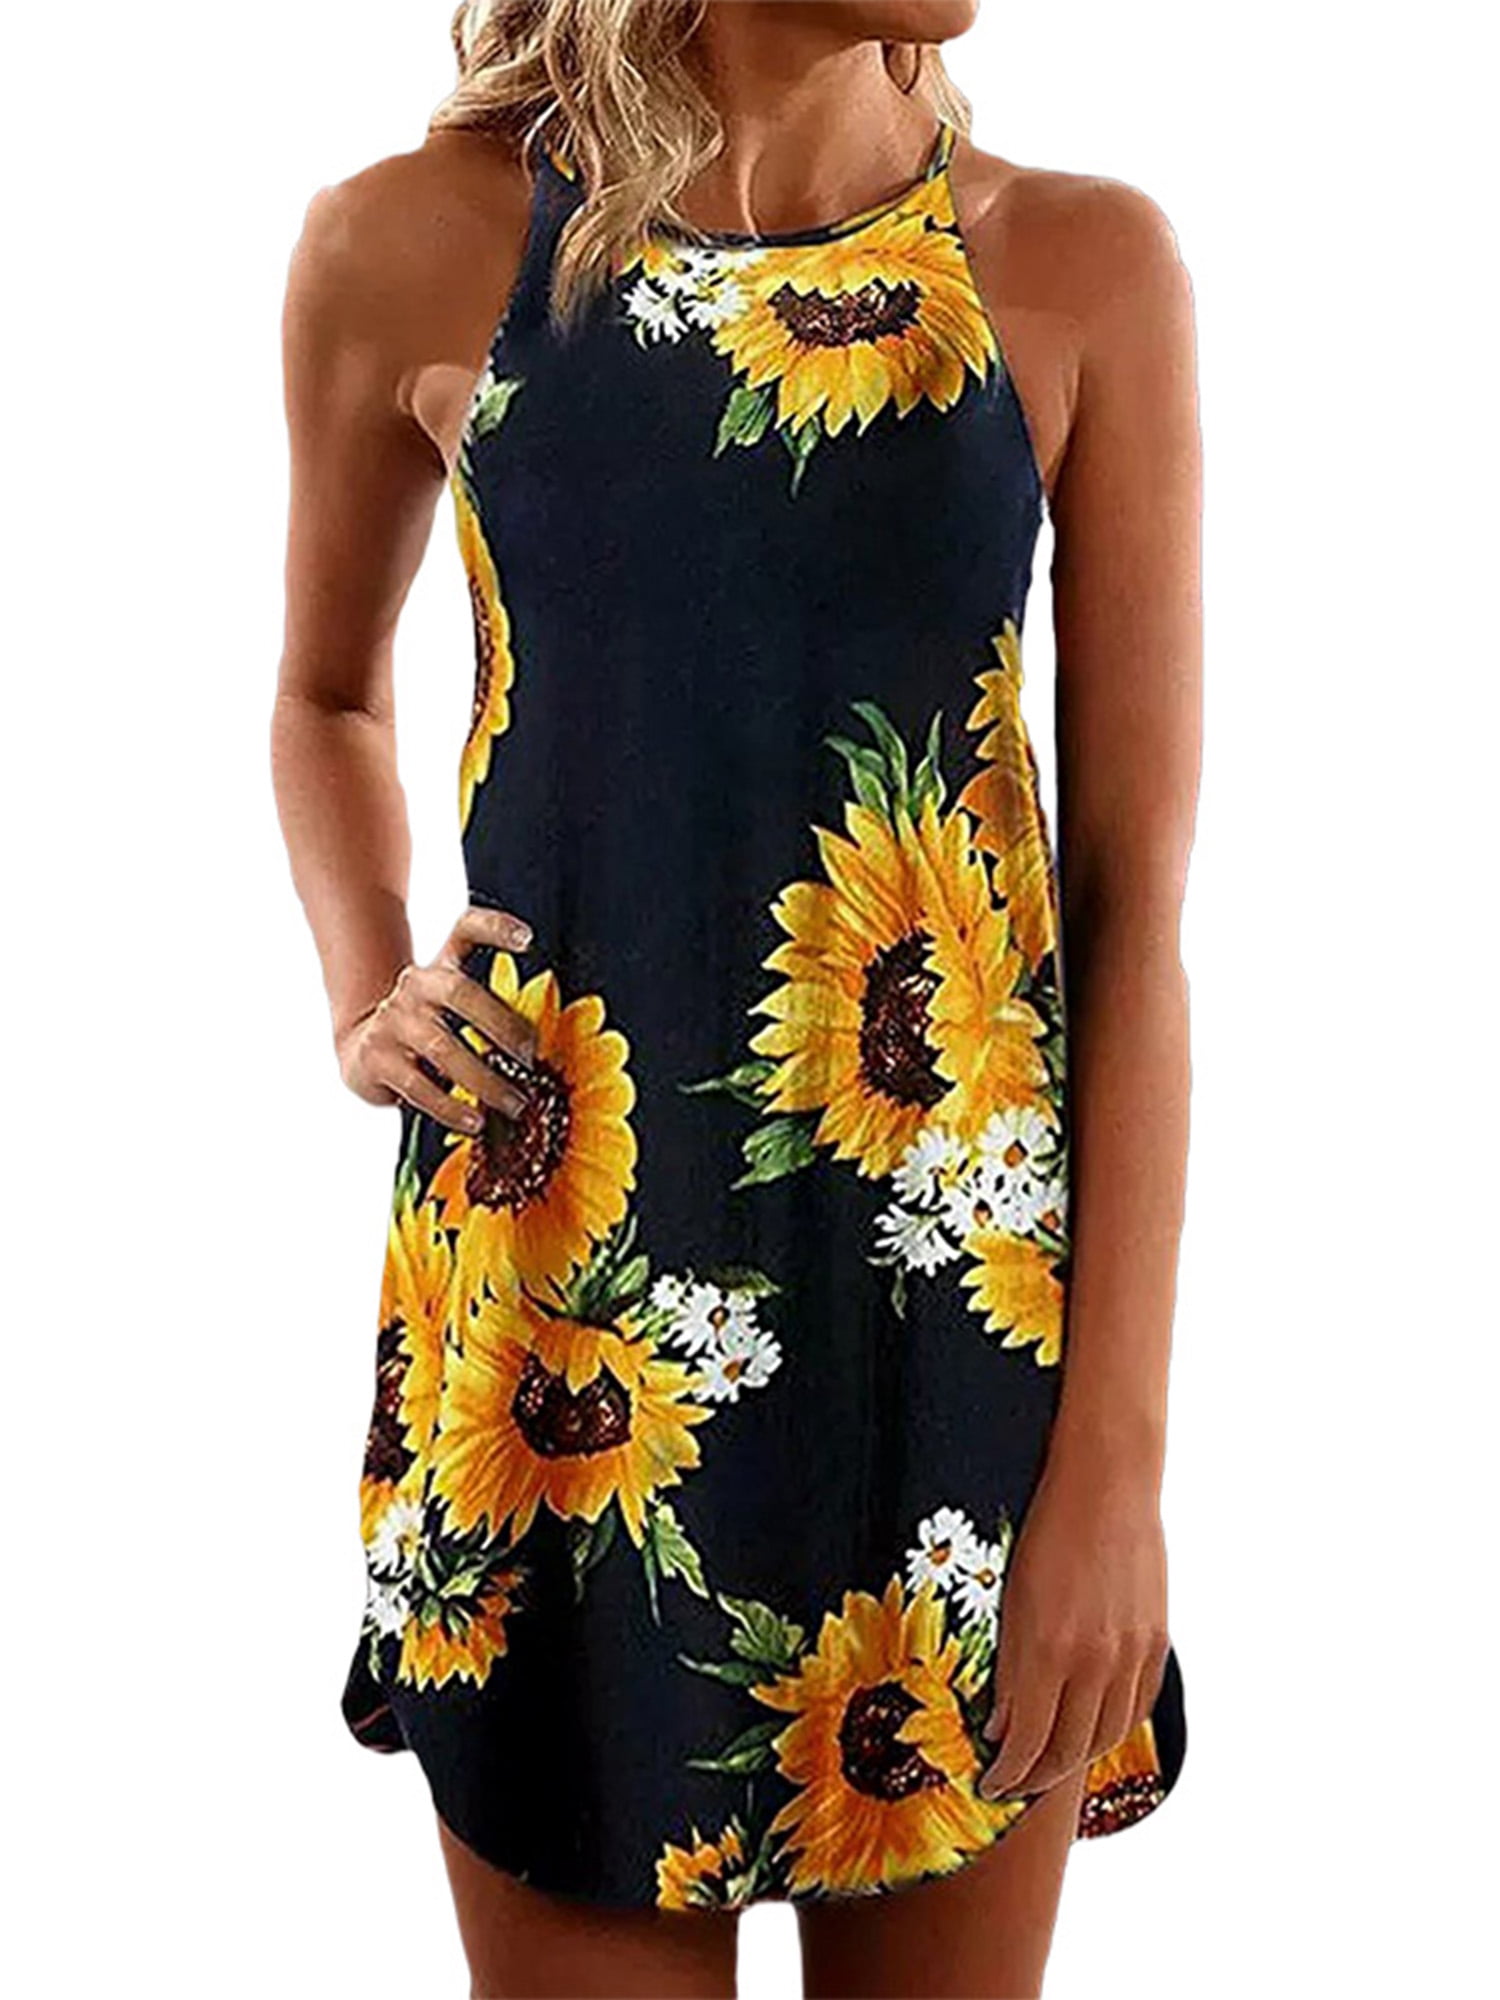 Womens Summer Floral Print Sleeveless Vest Dress Ladies Casual Tank Mini Dress